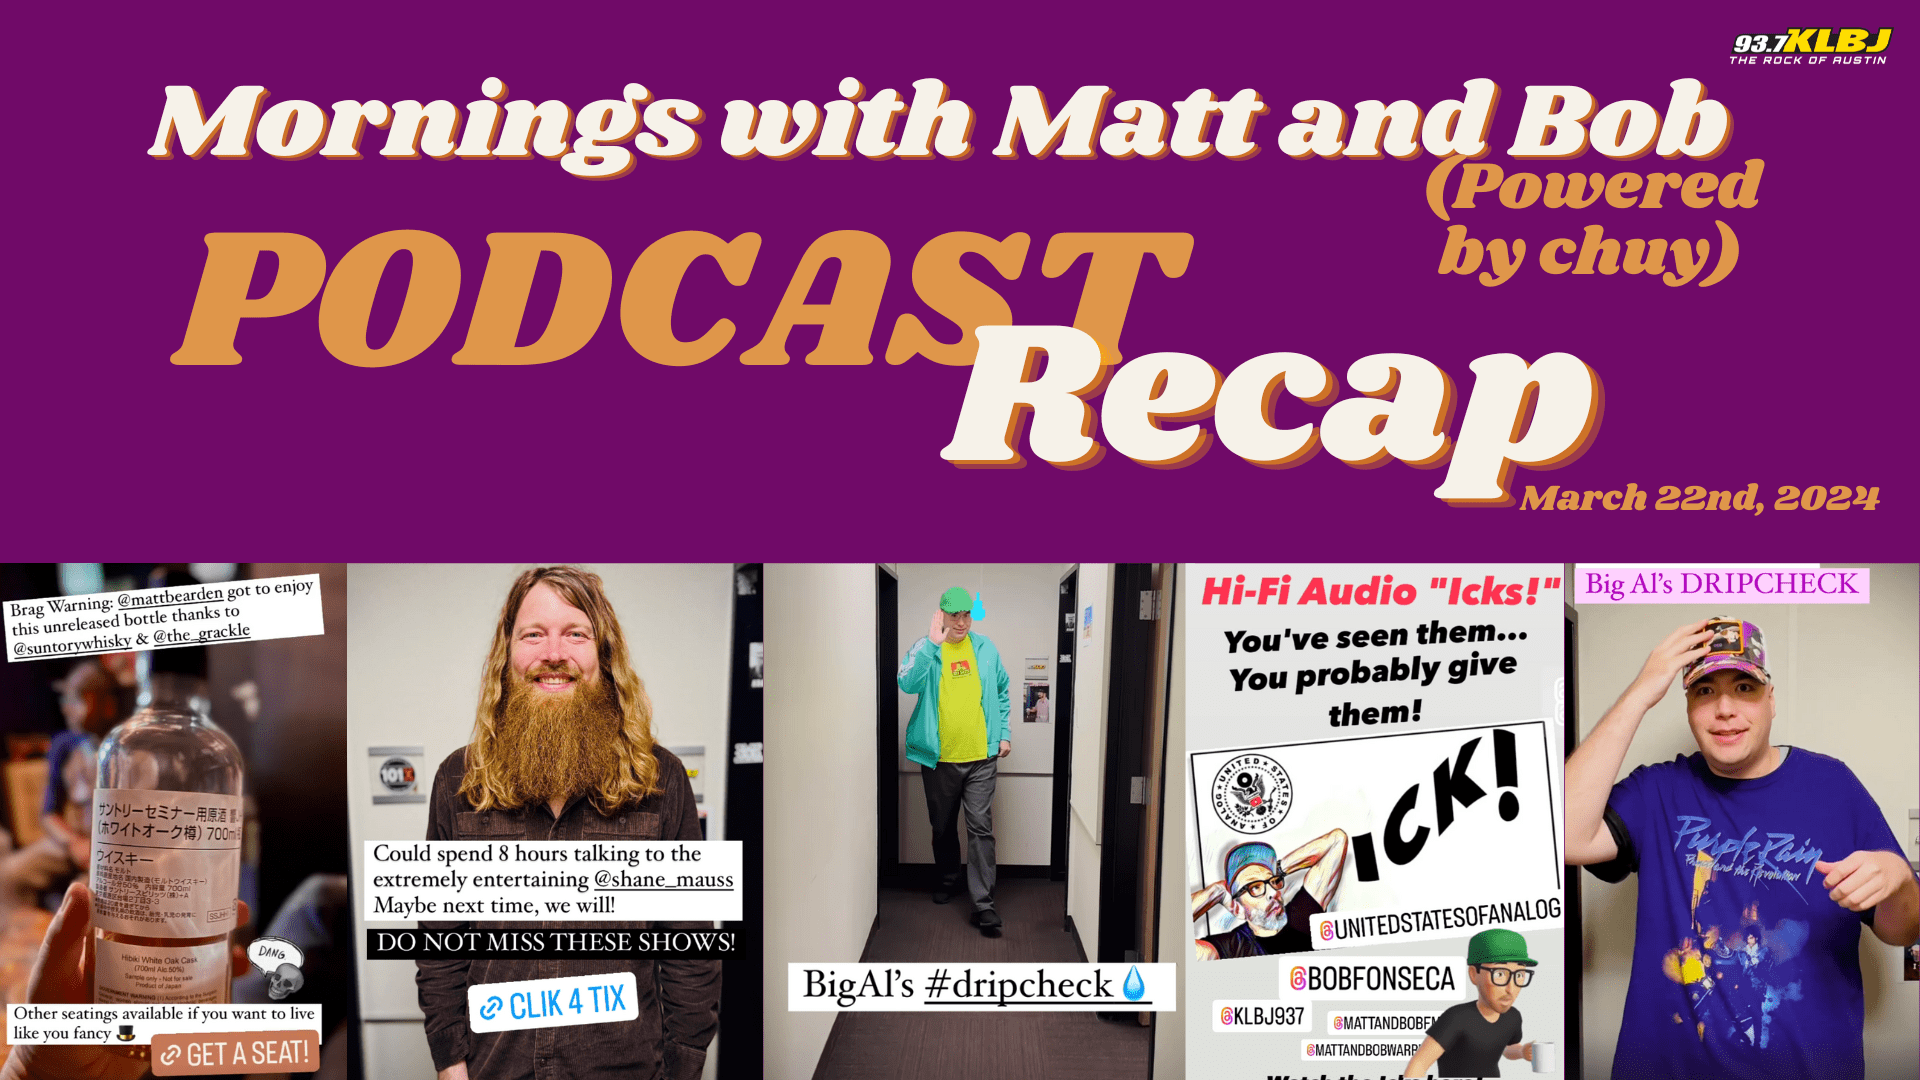 Podcast recap week 3/18-3/22 Morning with Matt and Bob on KLBJ FM in Austin texas